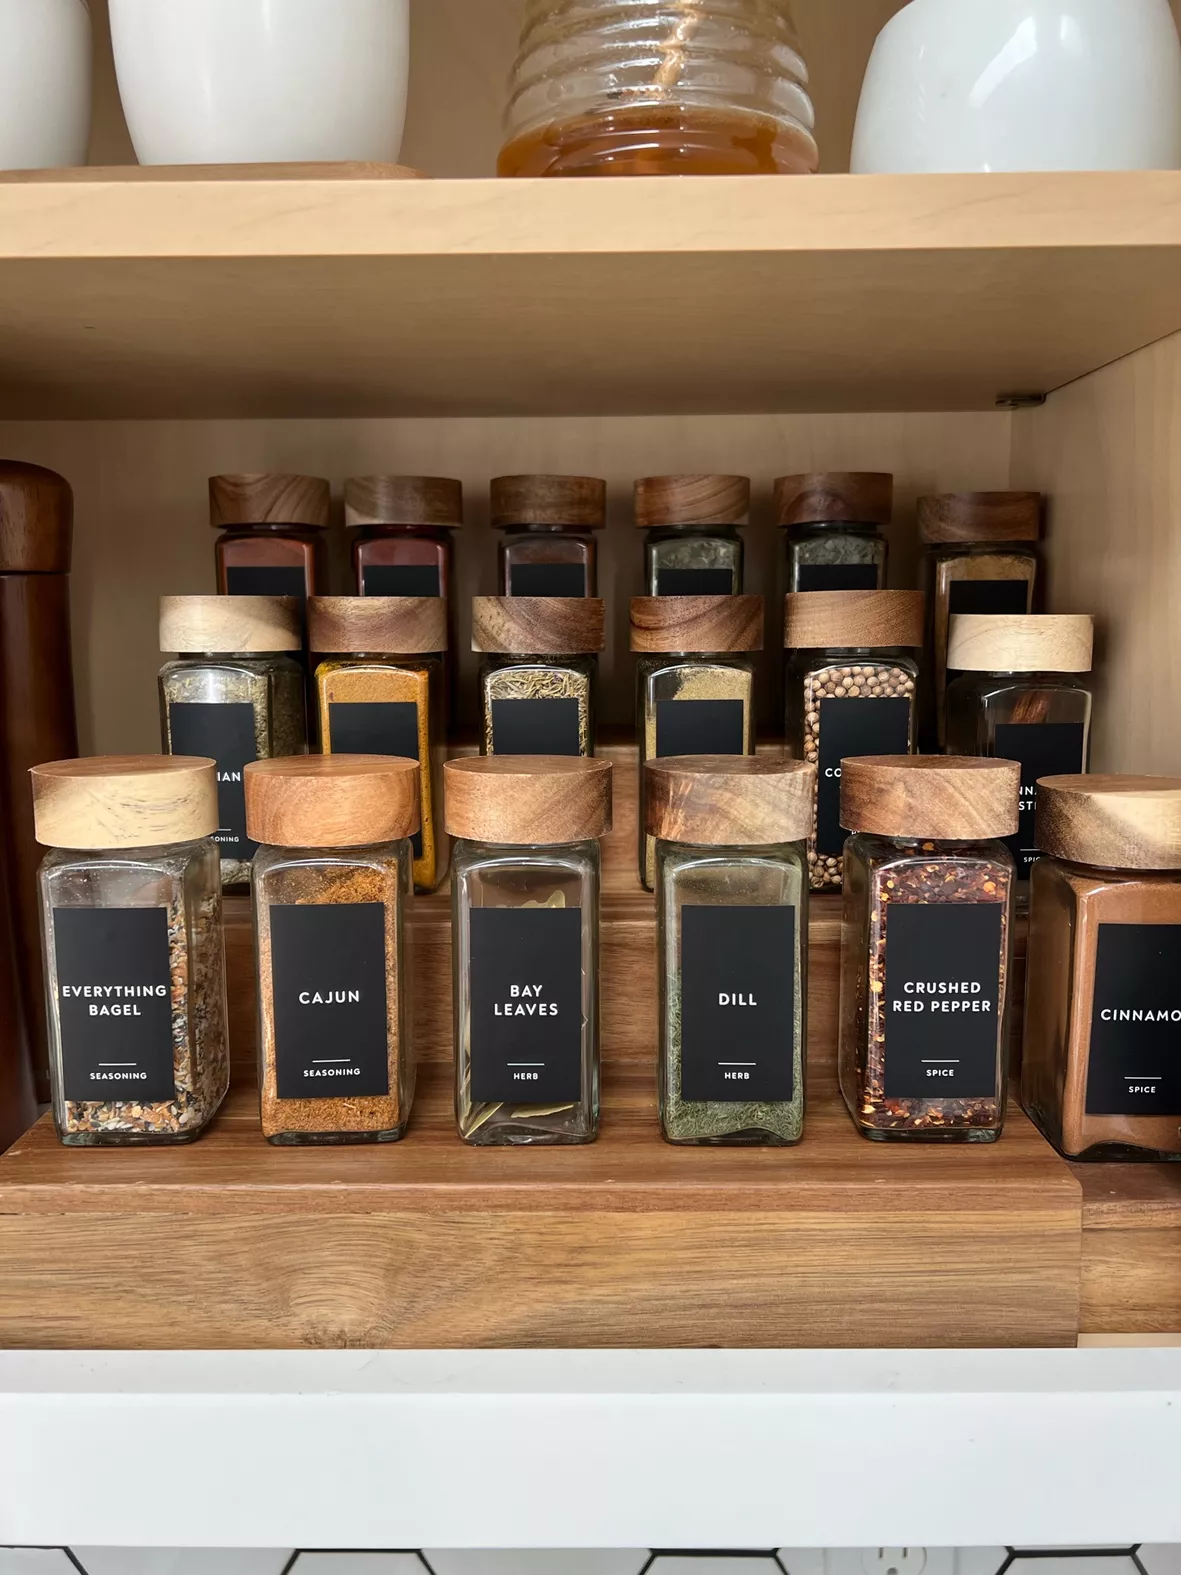 NeatMethod Glass Spice Jars with Black Lids, Set of 10 + Reviews